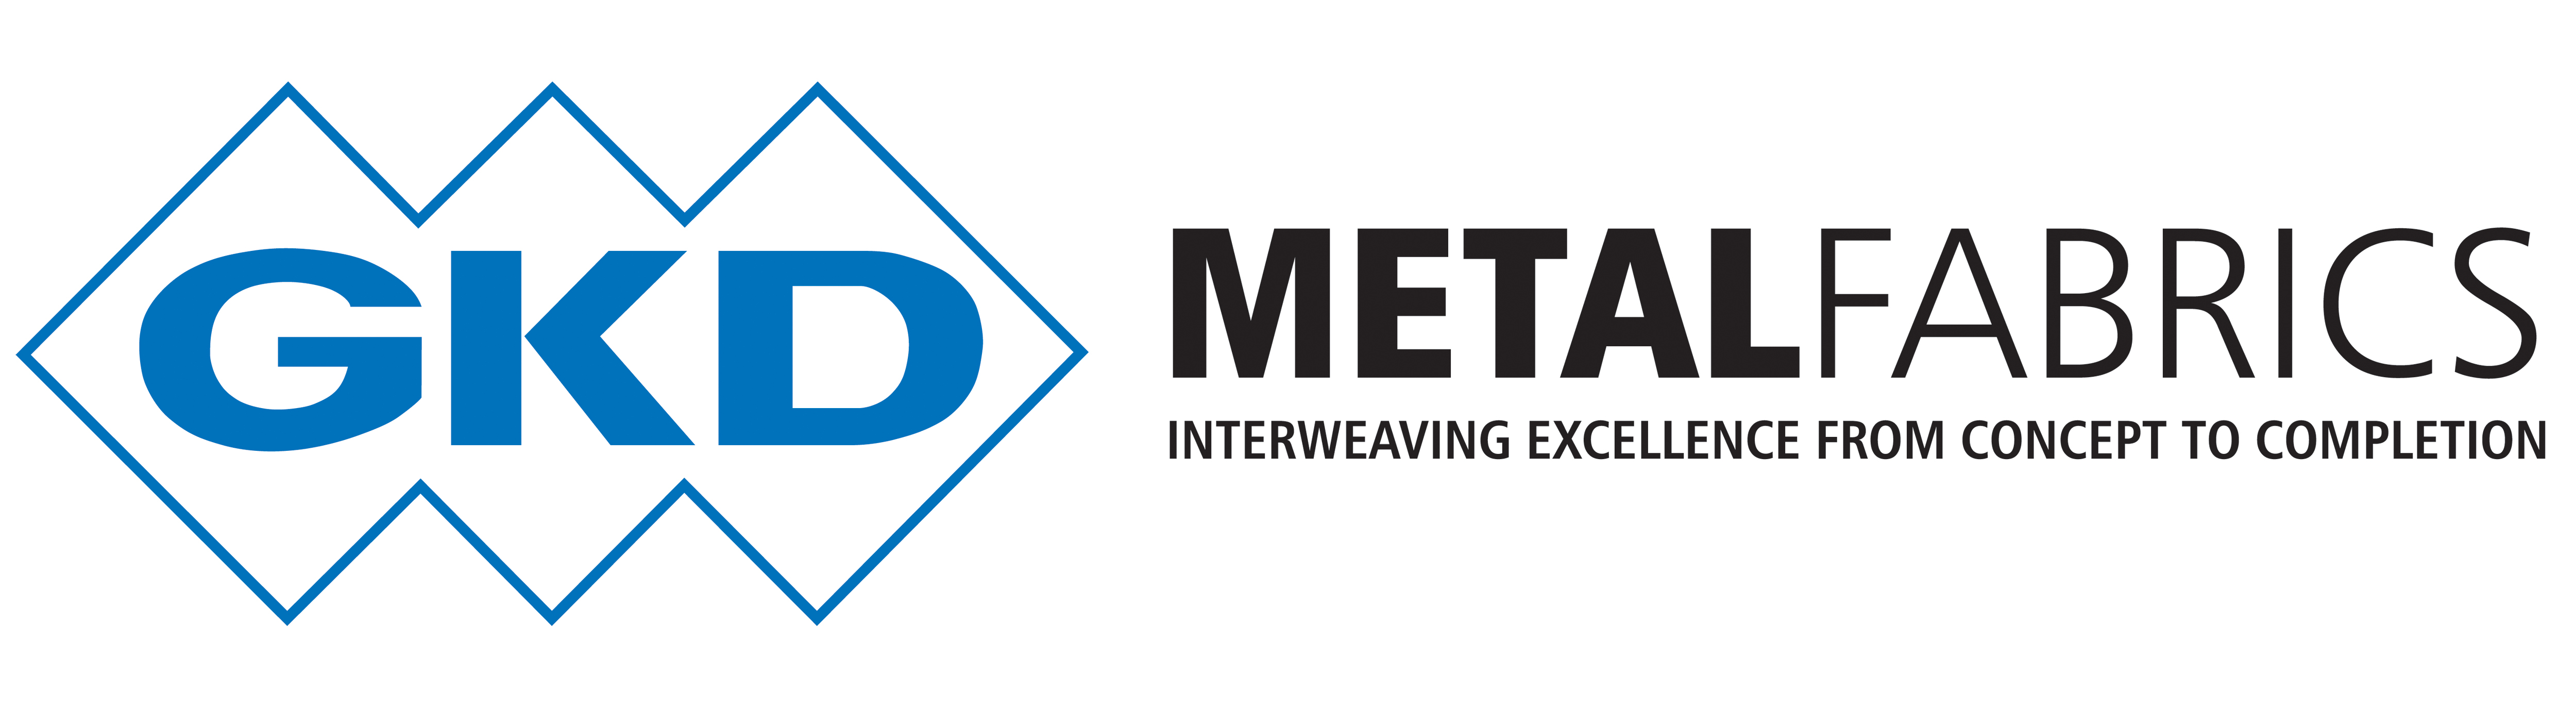 GKD Metal Fabrics Logo